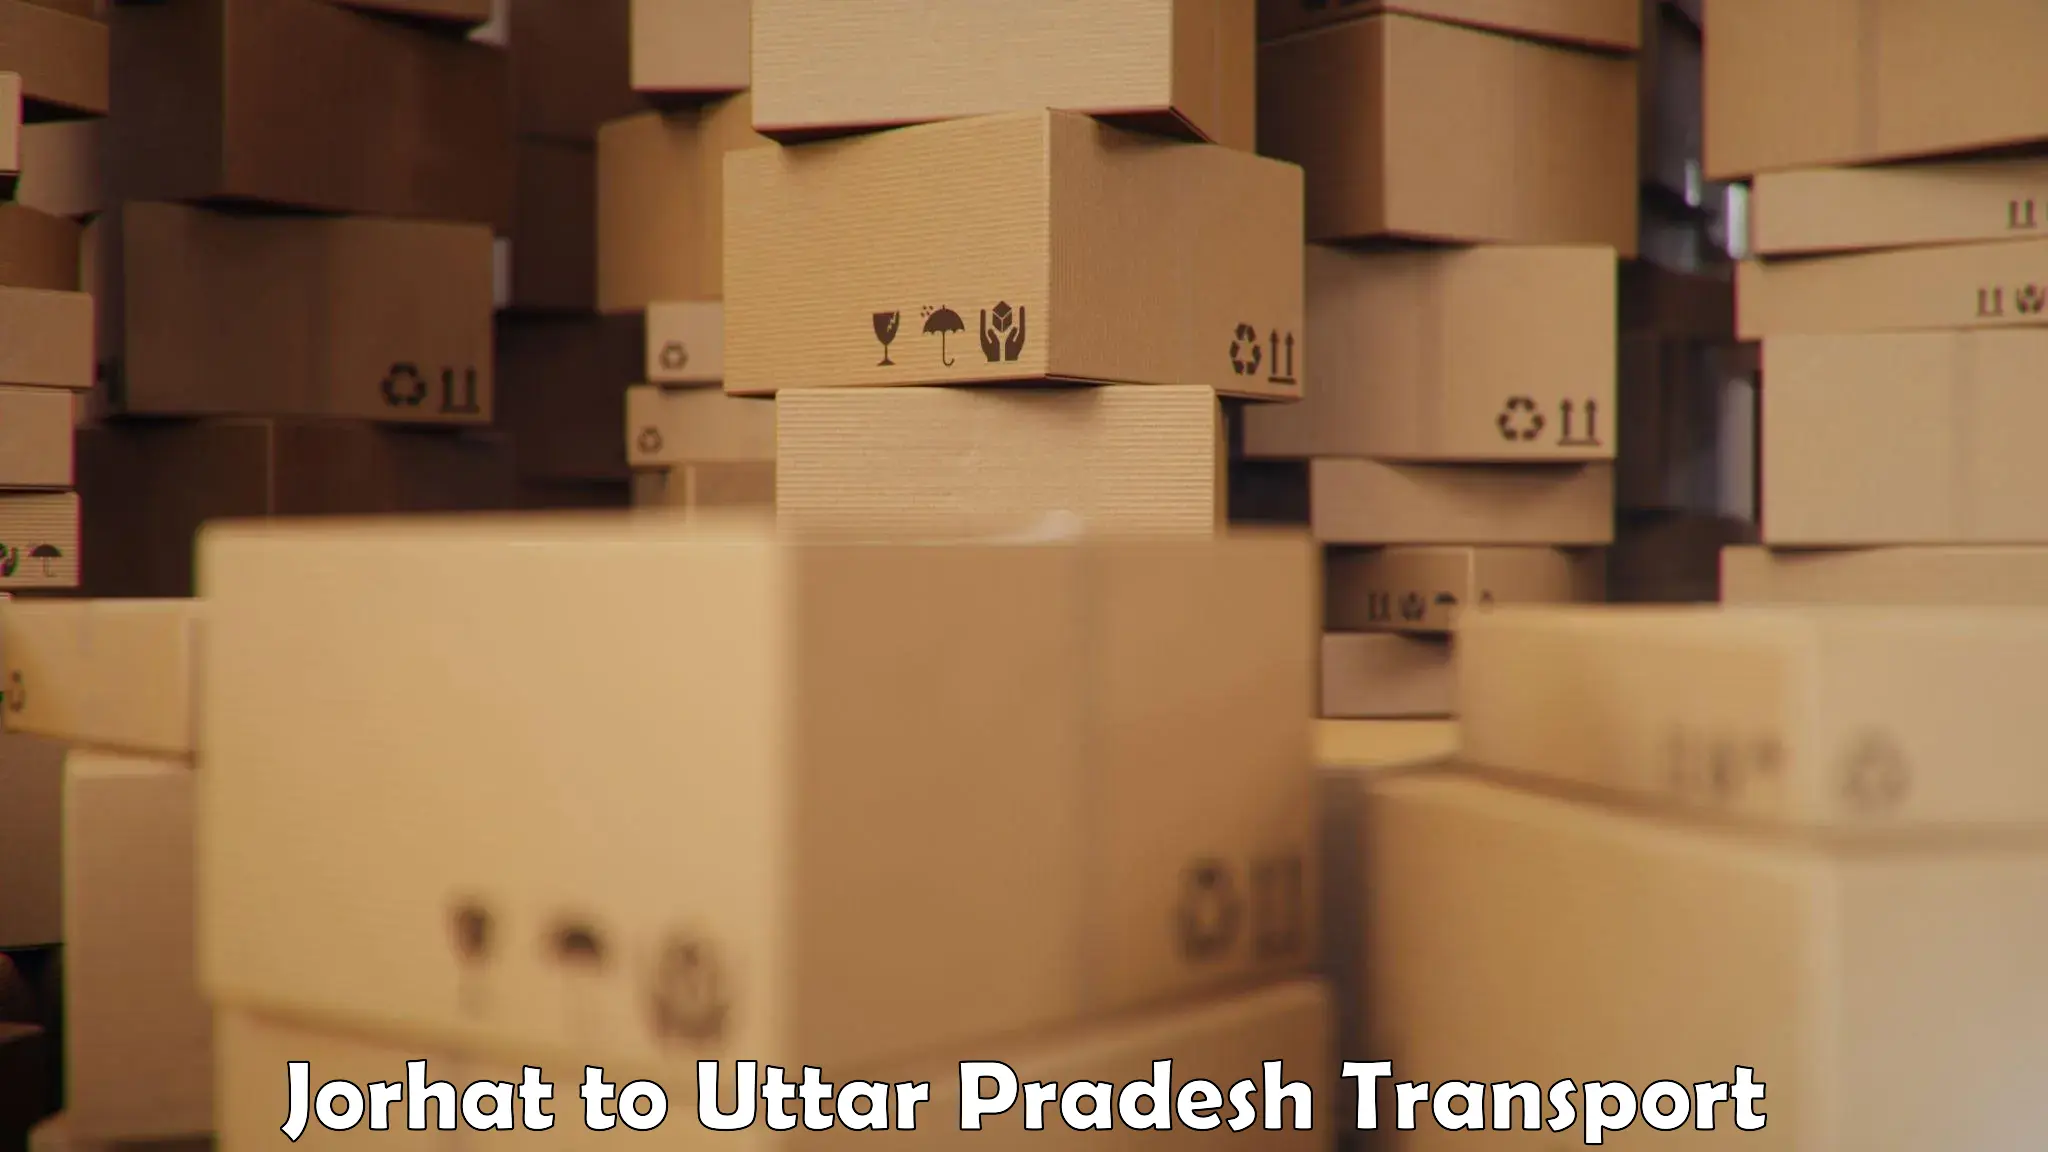 Cargo transport services Jorhat to Aligarh Muslim University